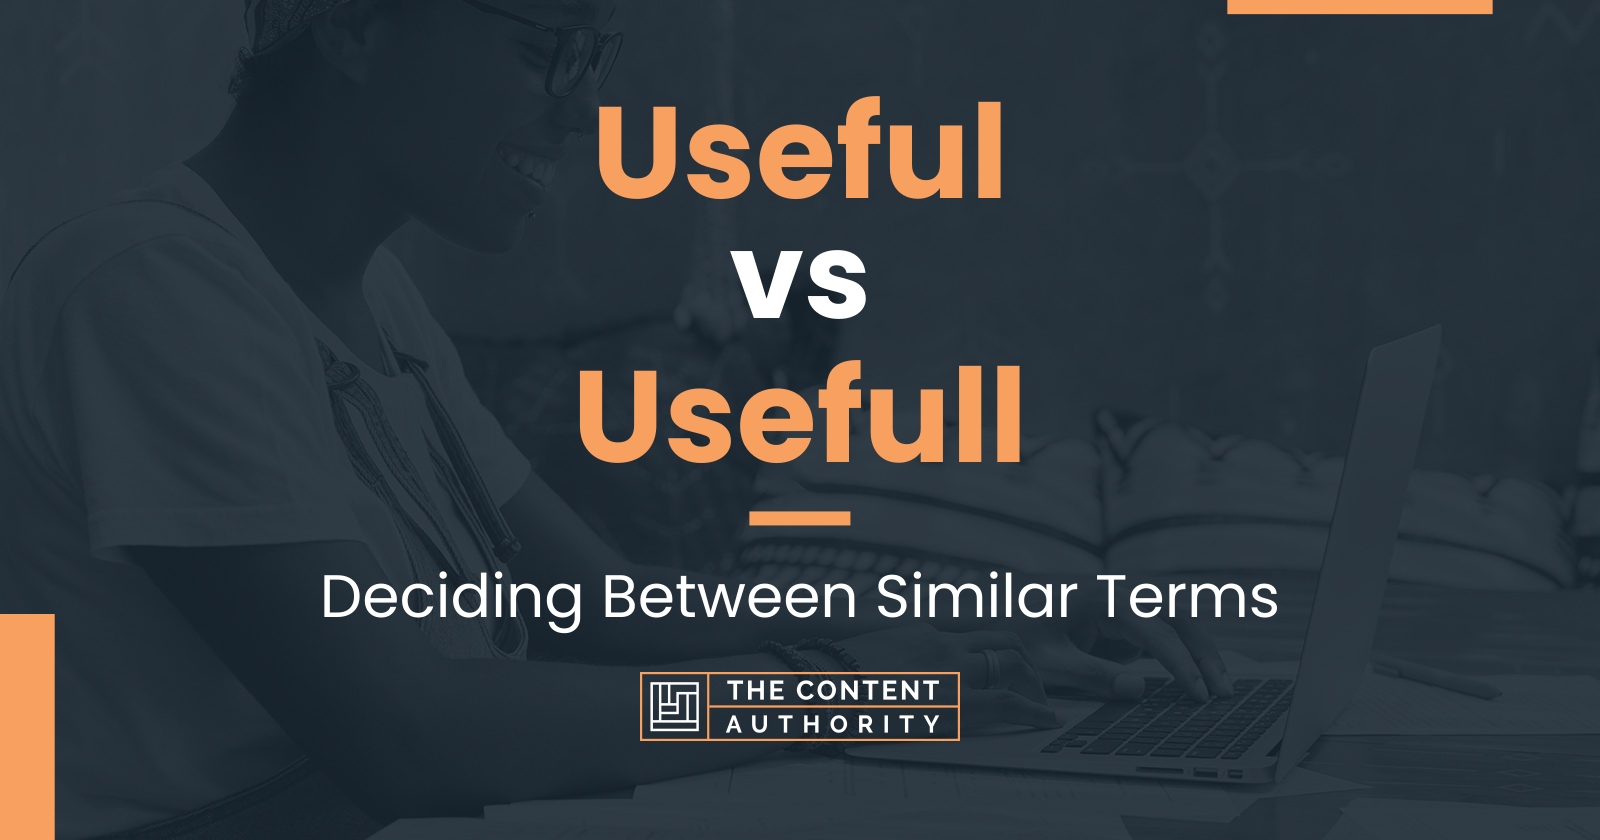 Useful vs Usefull: Deciding Between Similar Terms